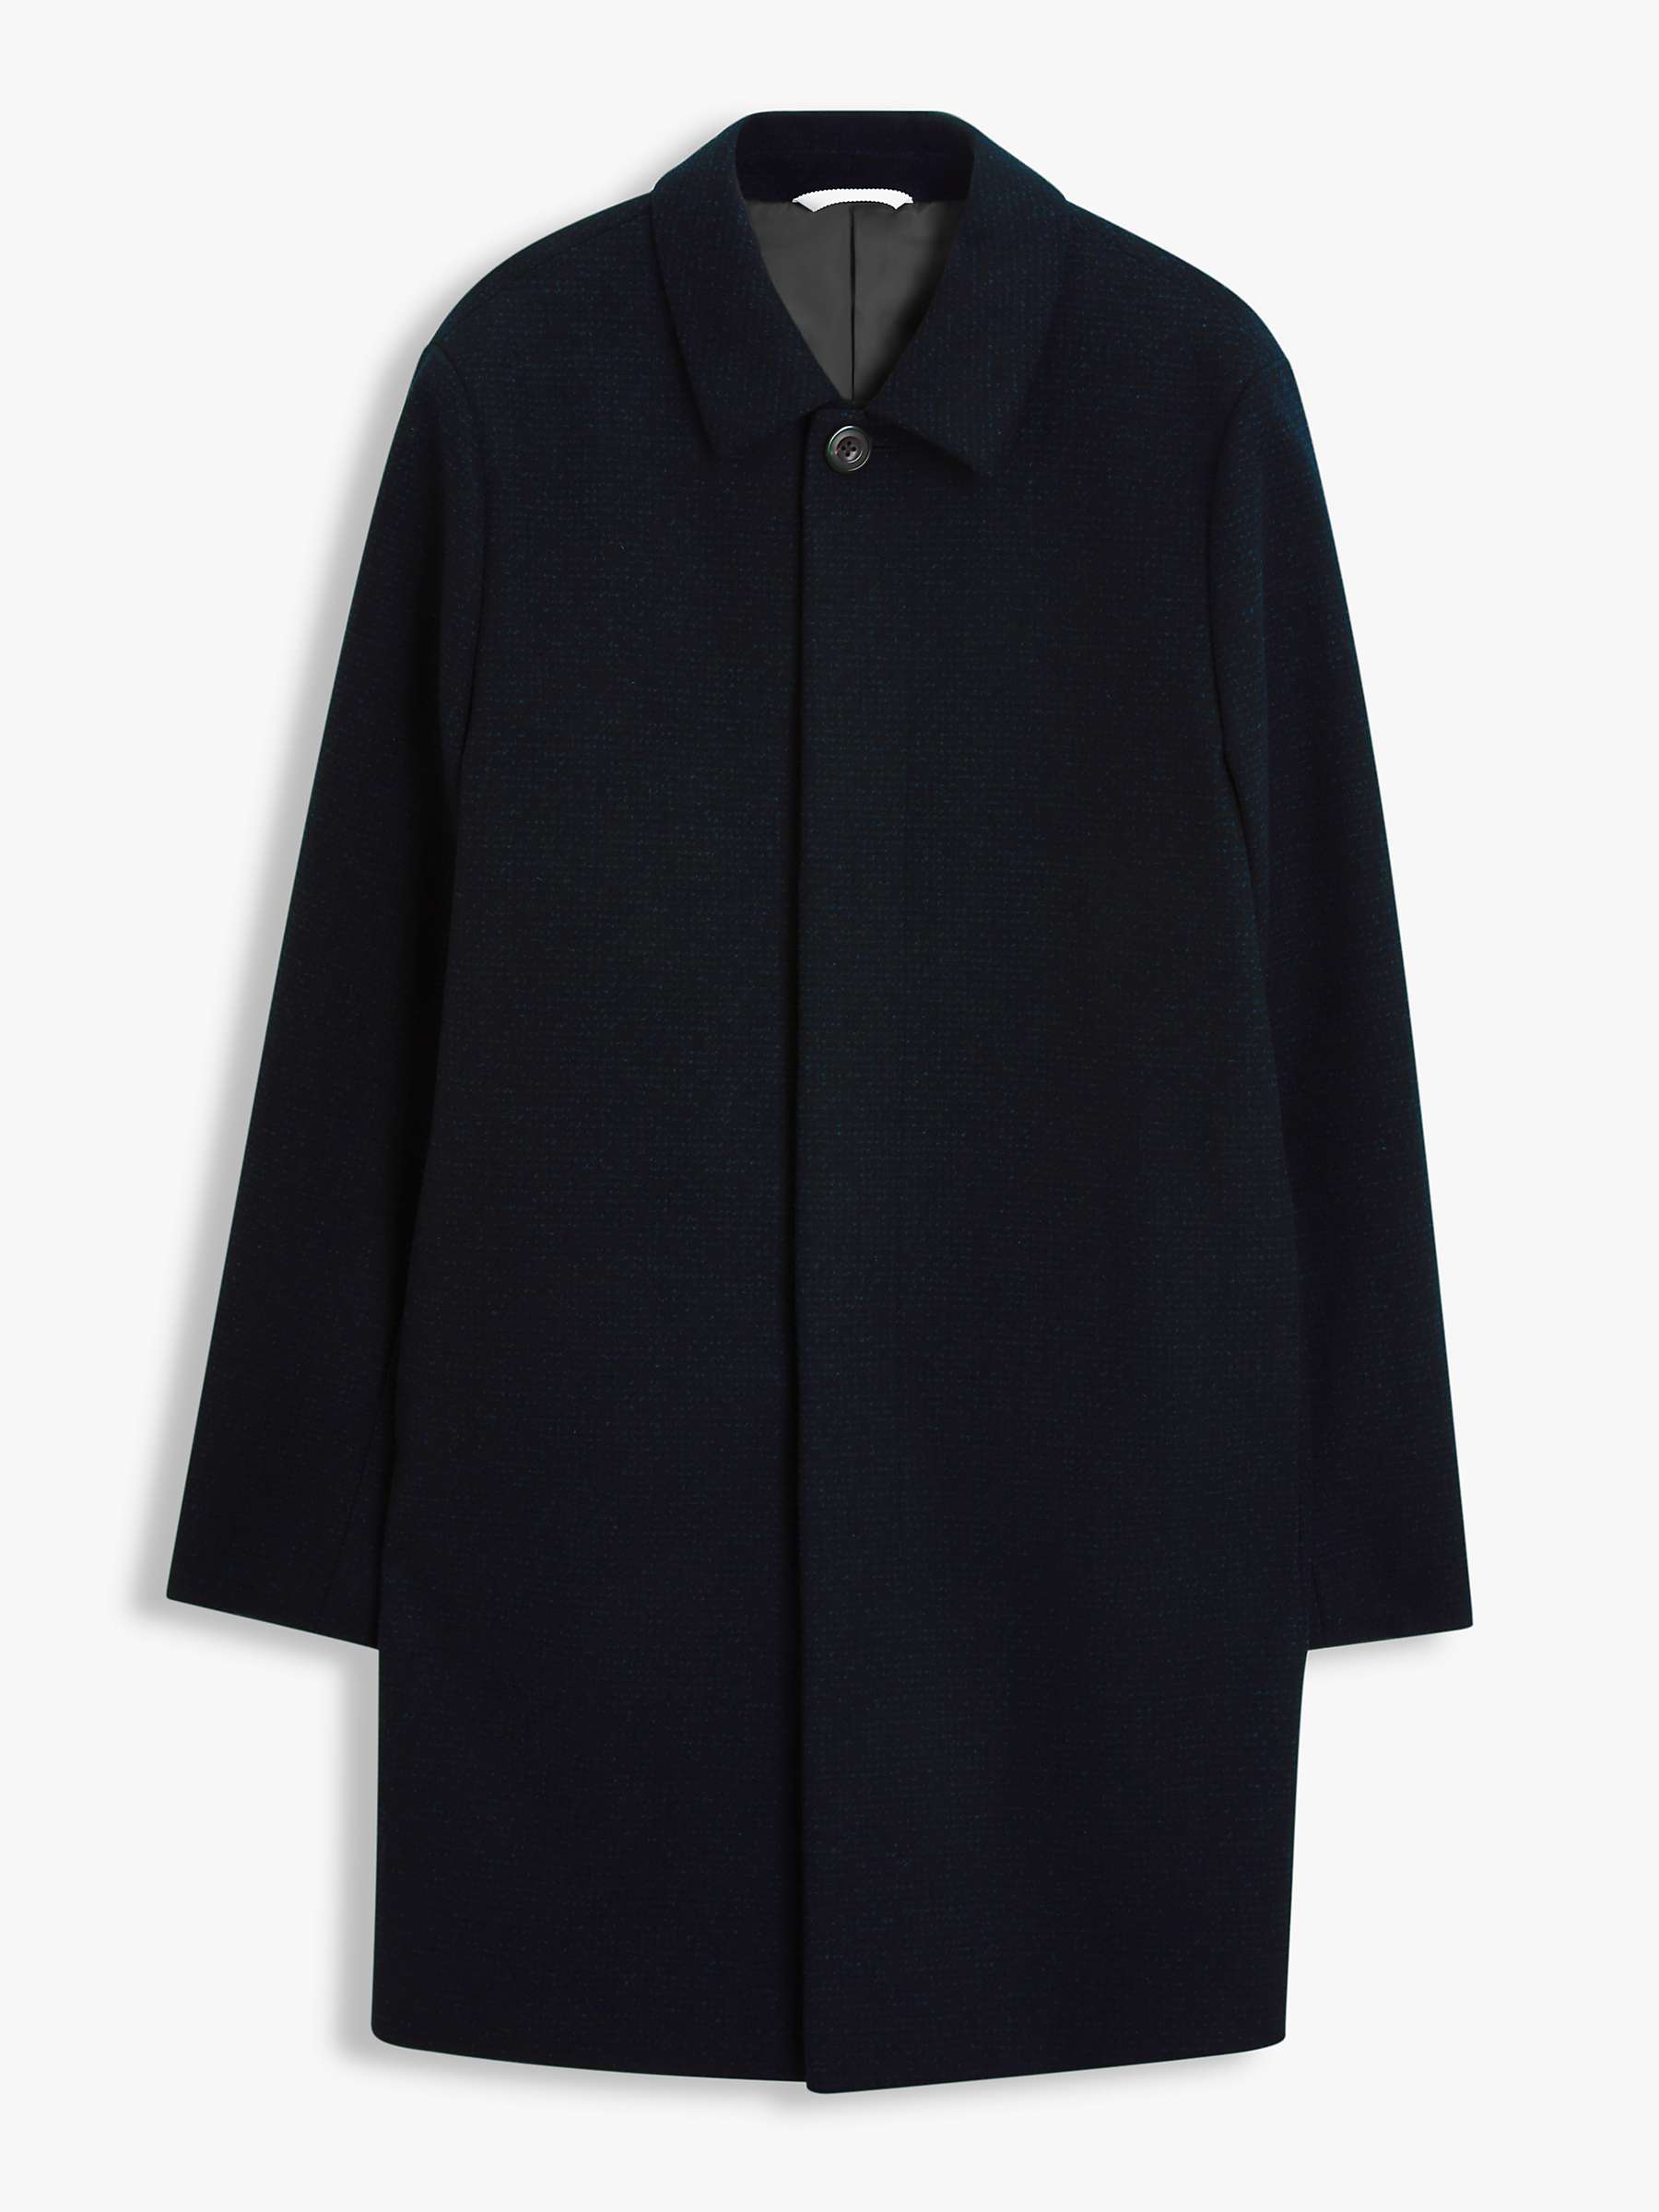 Kin Bonded Wool Blend Overcoat, Navy Texture at John Lewis & Partners